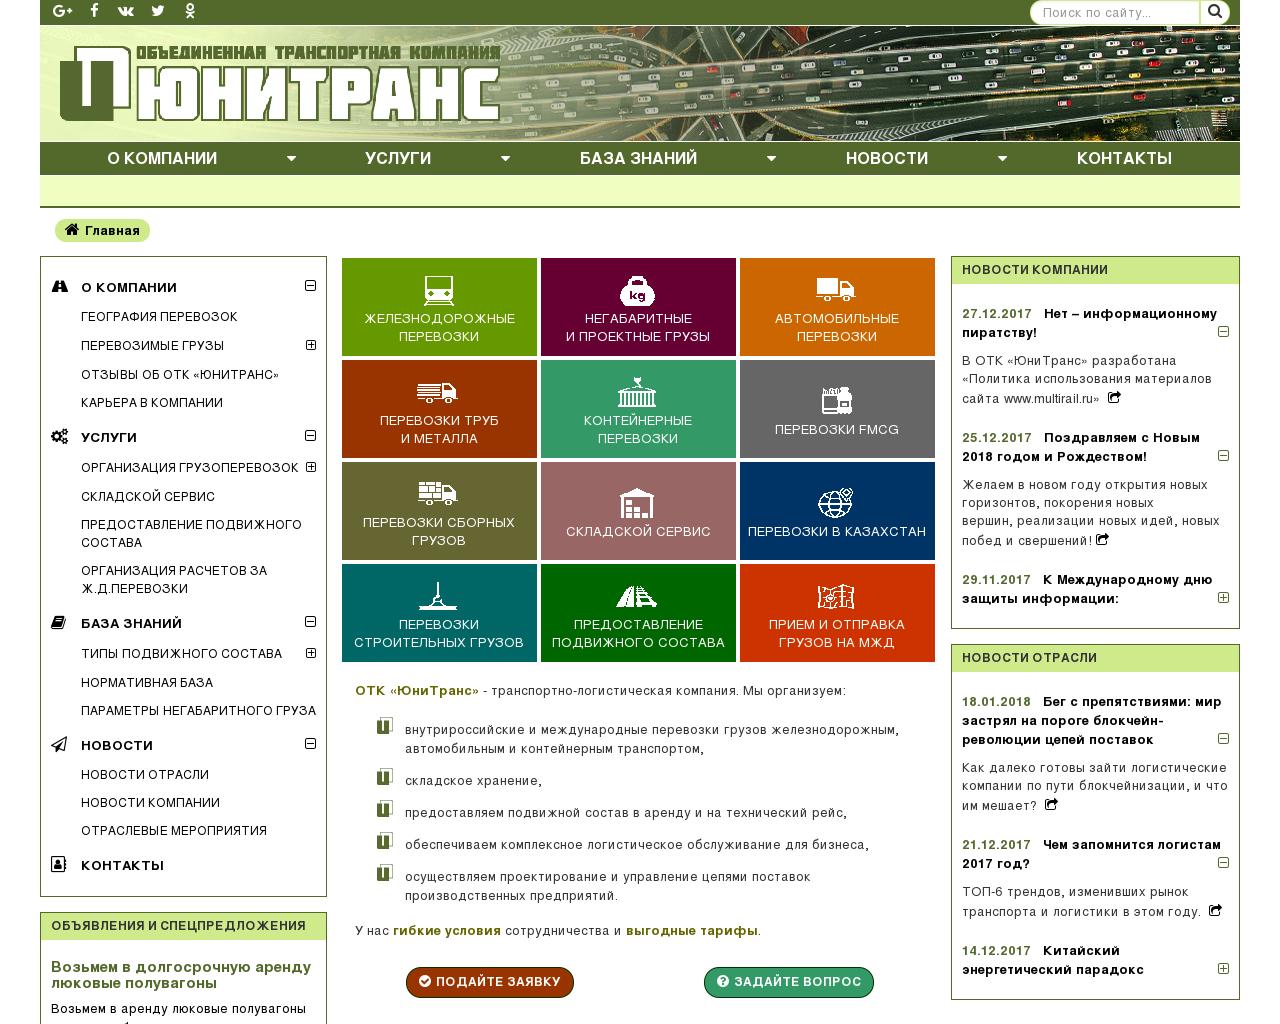 Изображение сайта multirail.ru в разрешении 1280x1024